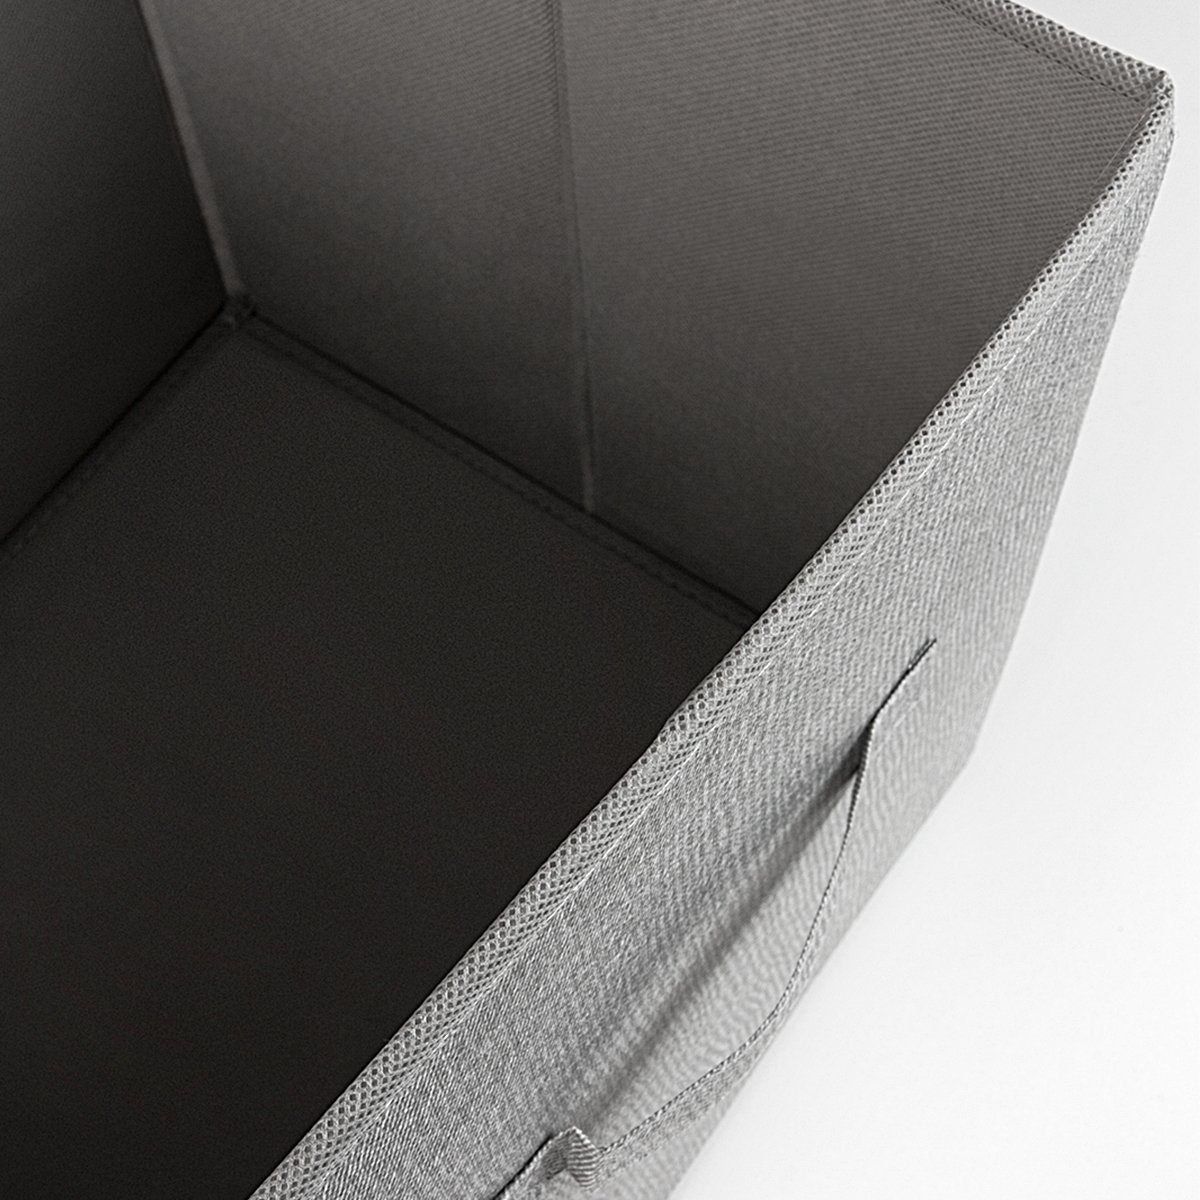 Ящик для хранения МВМ My Home текстильный, 280x280x280 мм, серый (TH-08 GRAY) - фото 8